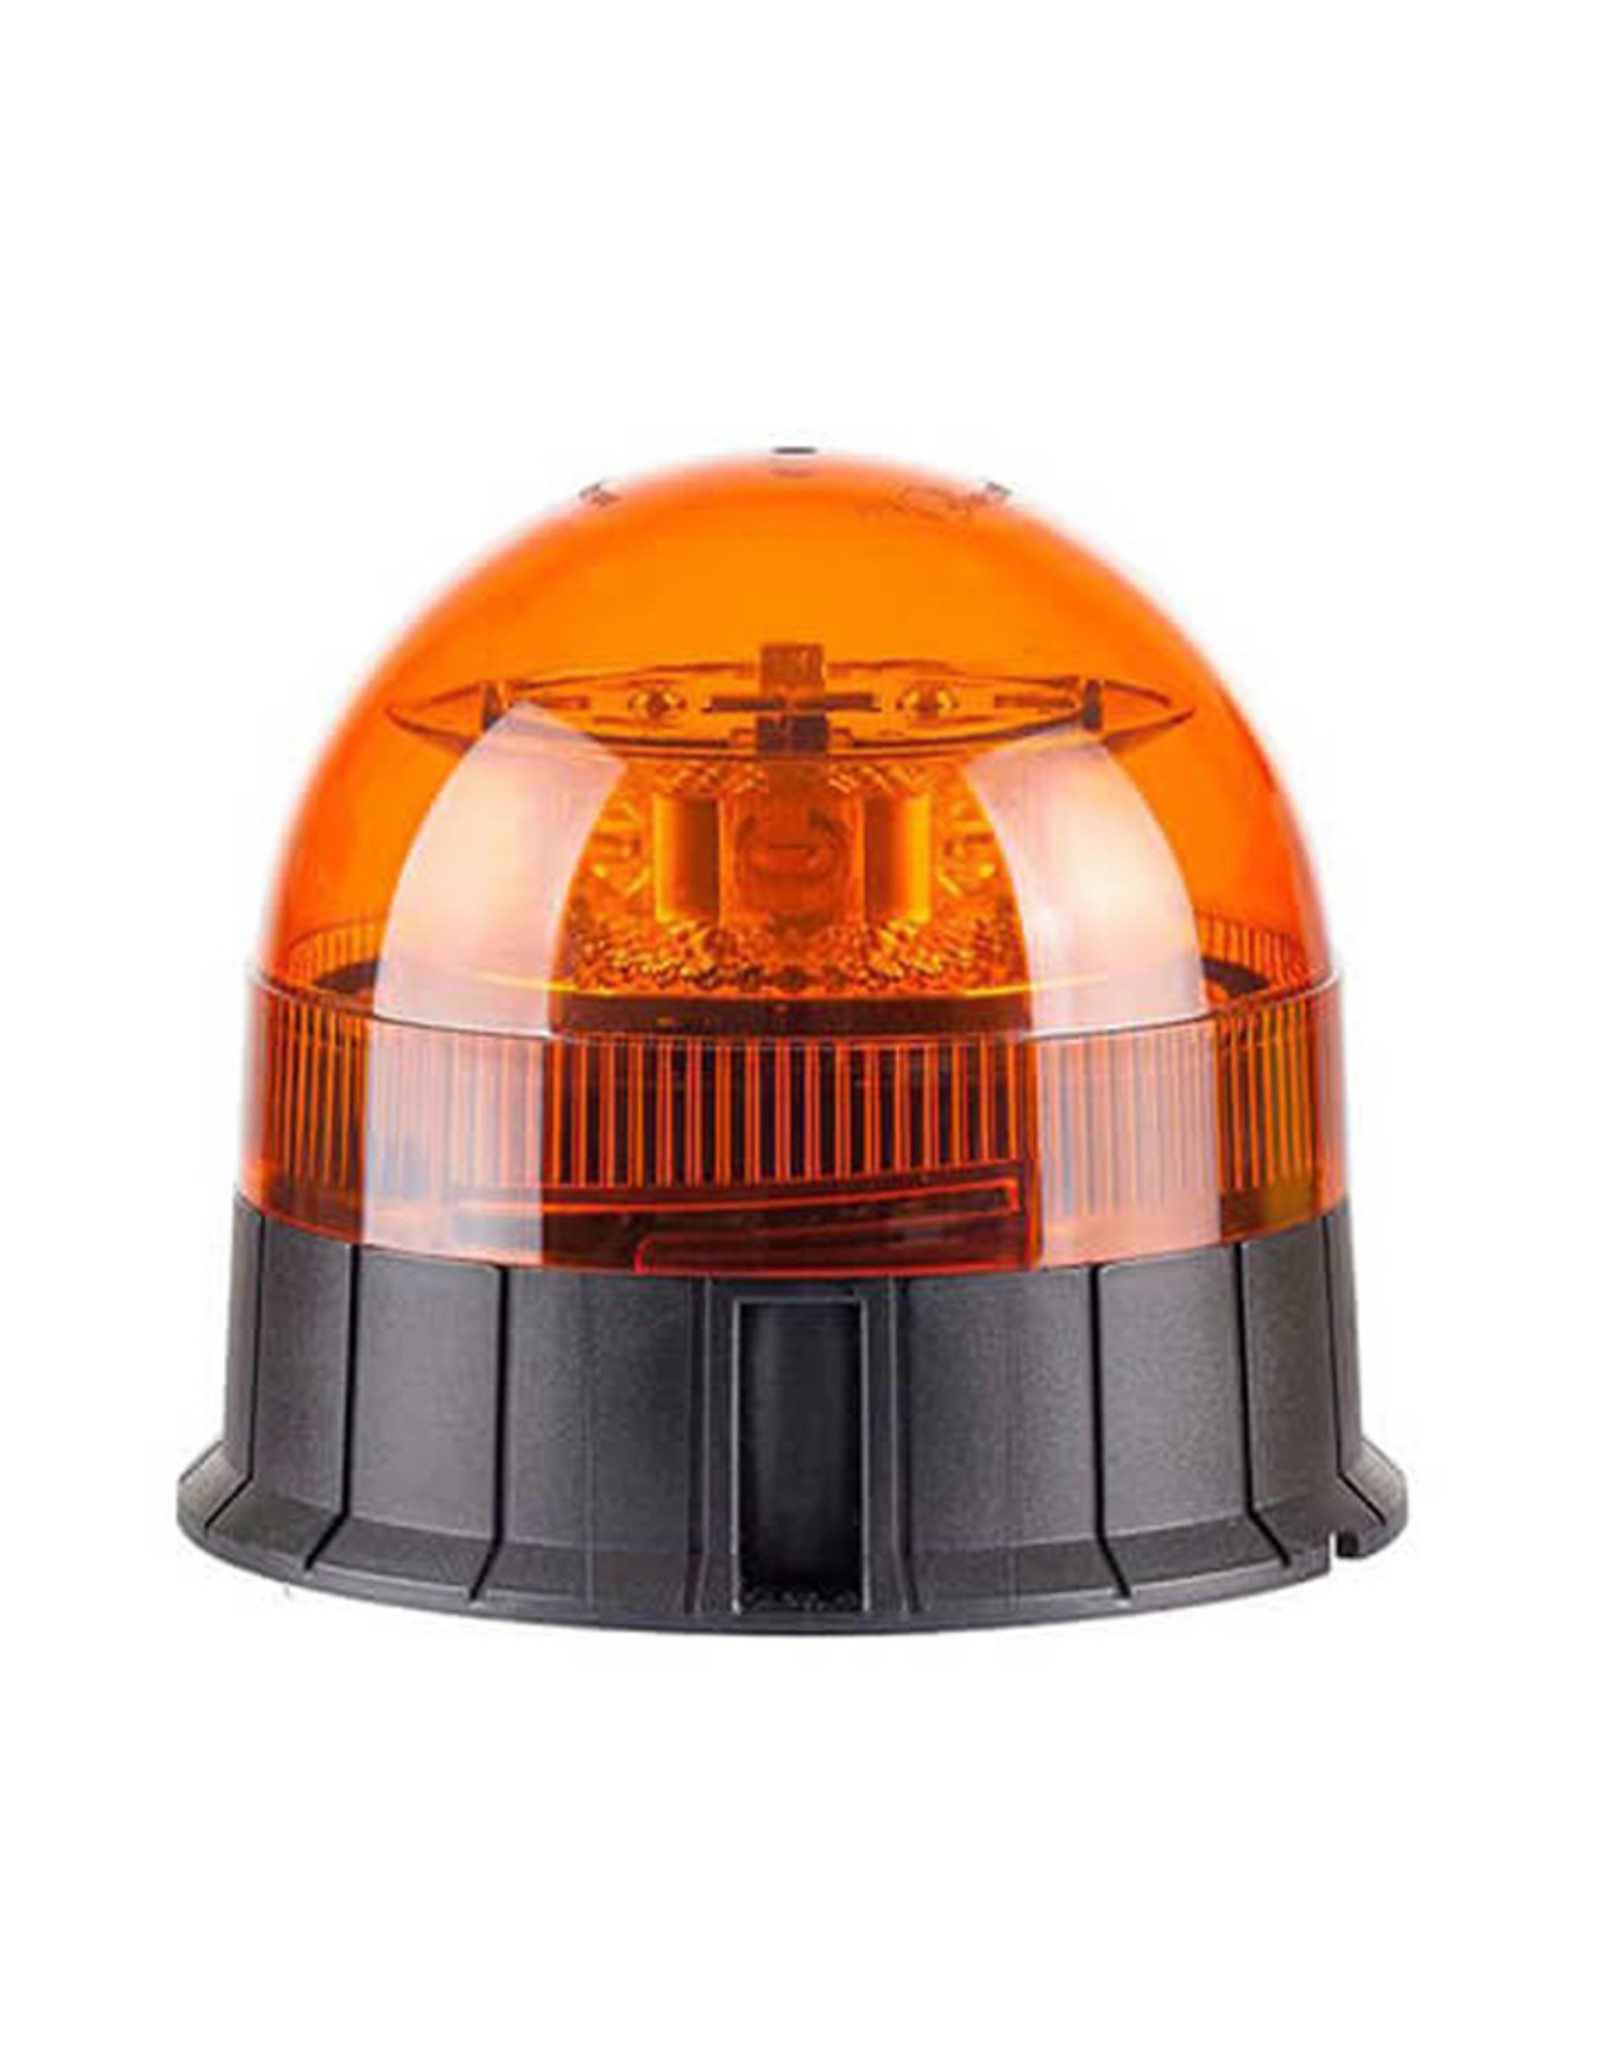 Rundumleuchte LED R65 Orange Magnet Saugnapfbefestigung, 12-24V